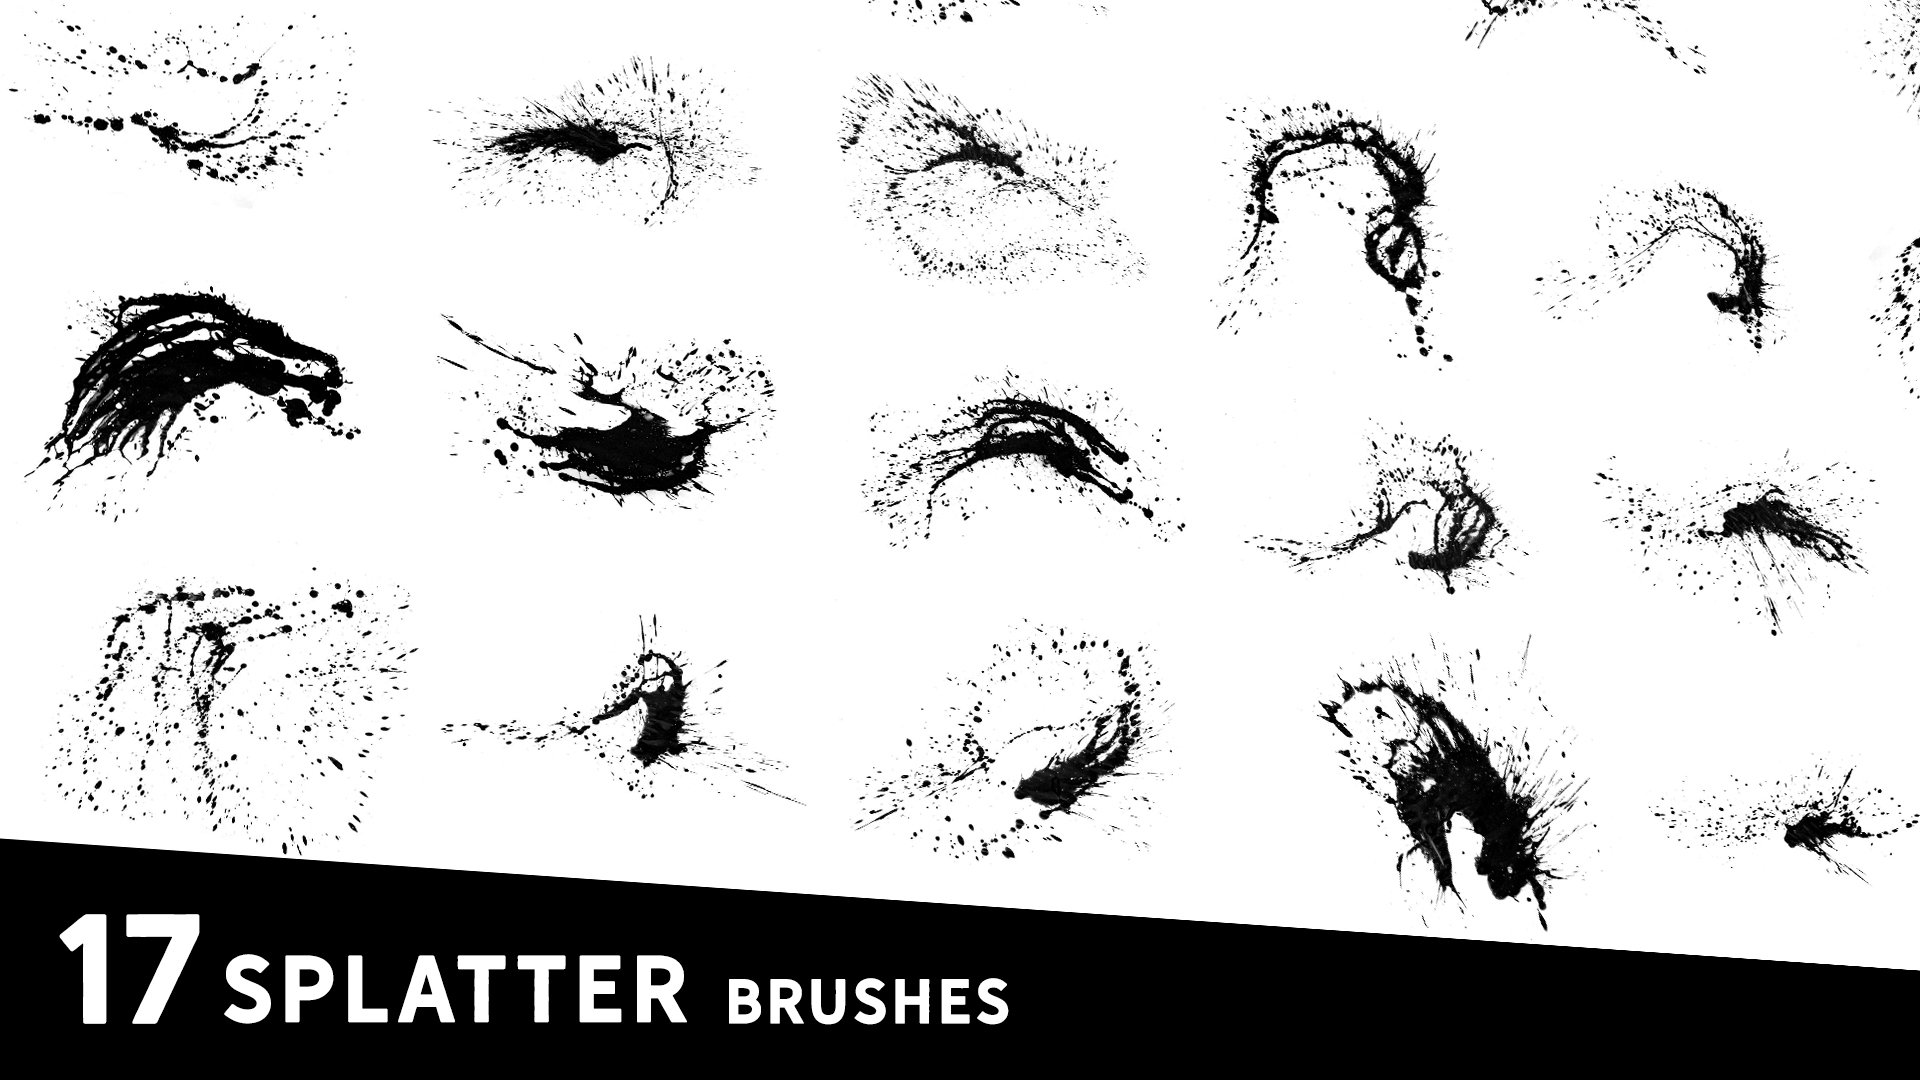 Circular splatter brushespreview image.